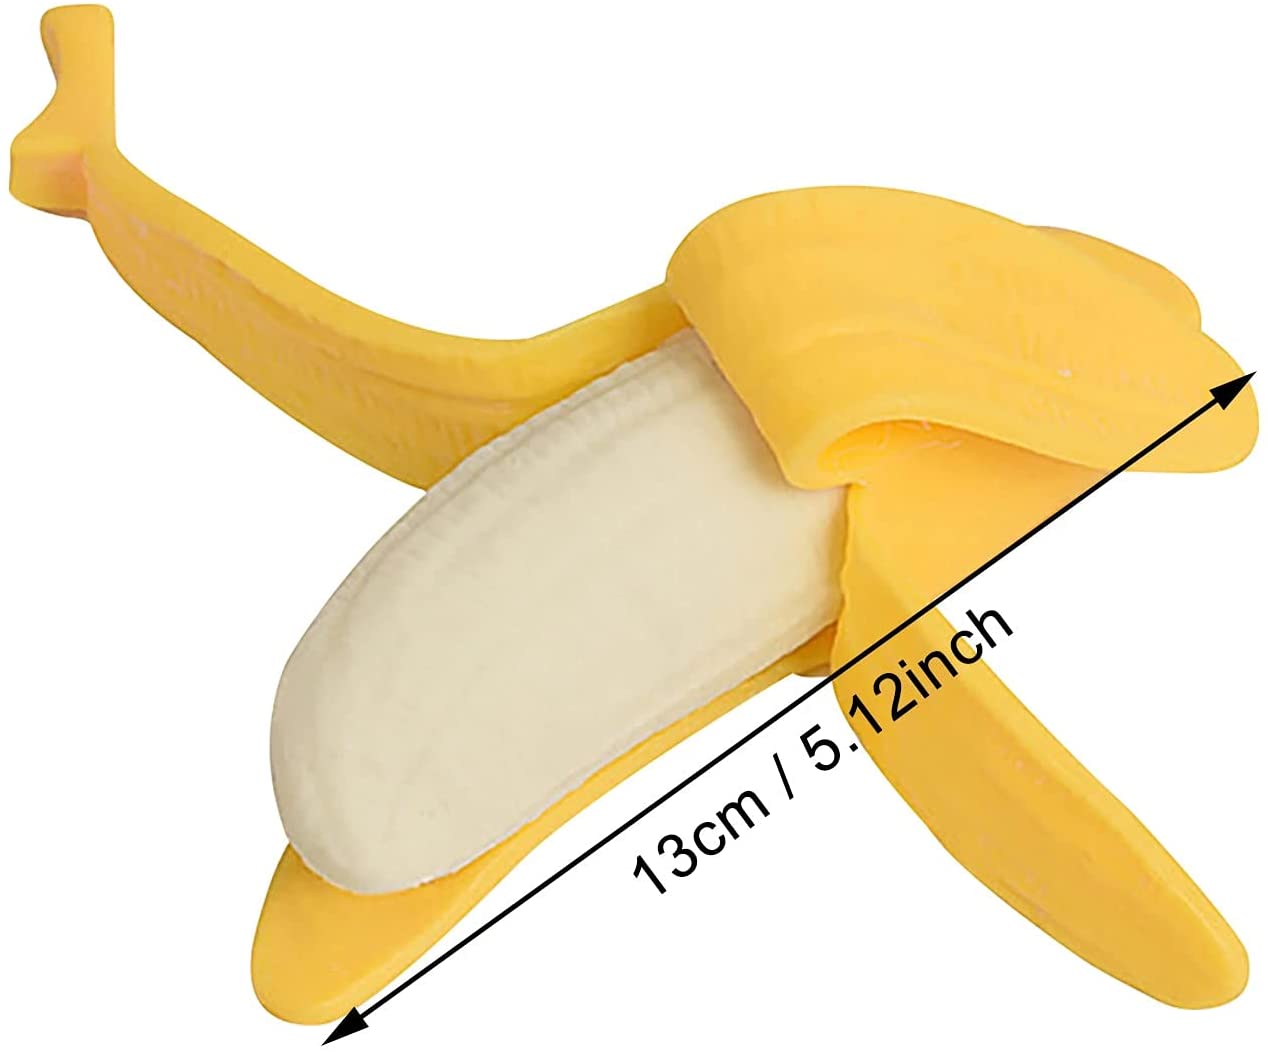 Stretchy Banana Fidget Toy 🍌